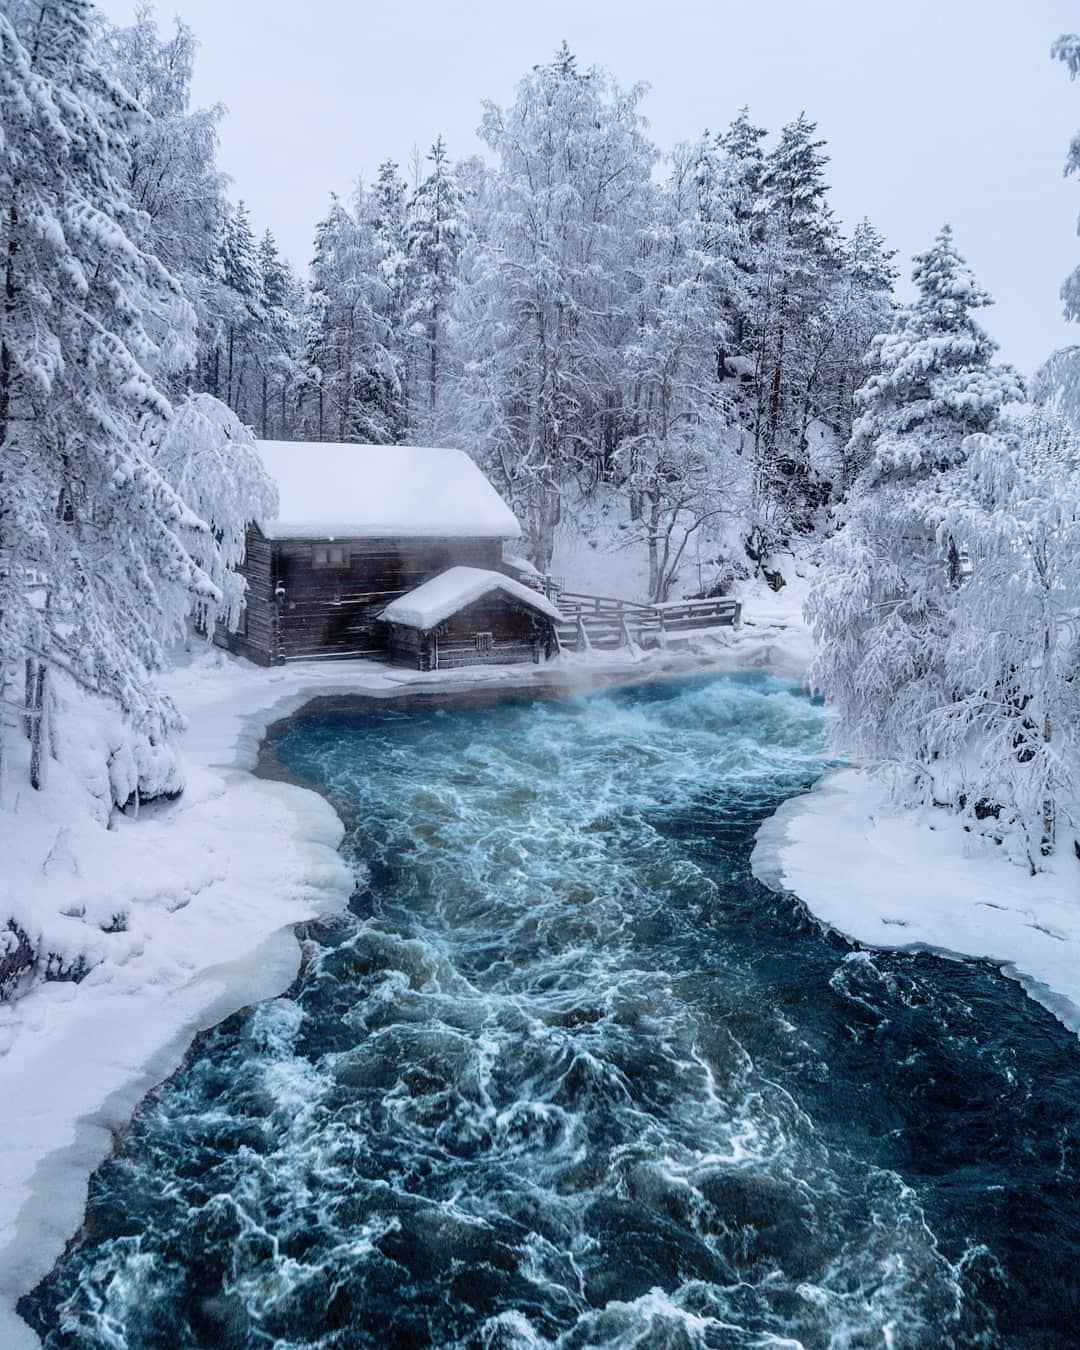 Cabin at Oulanka National Park, Finland (Photo credit to Javi Sales)